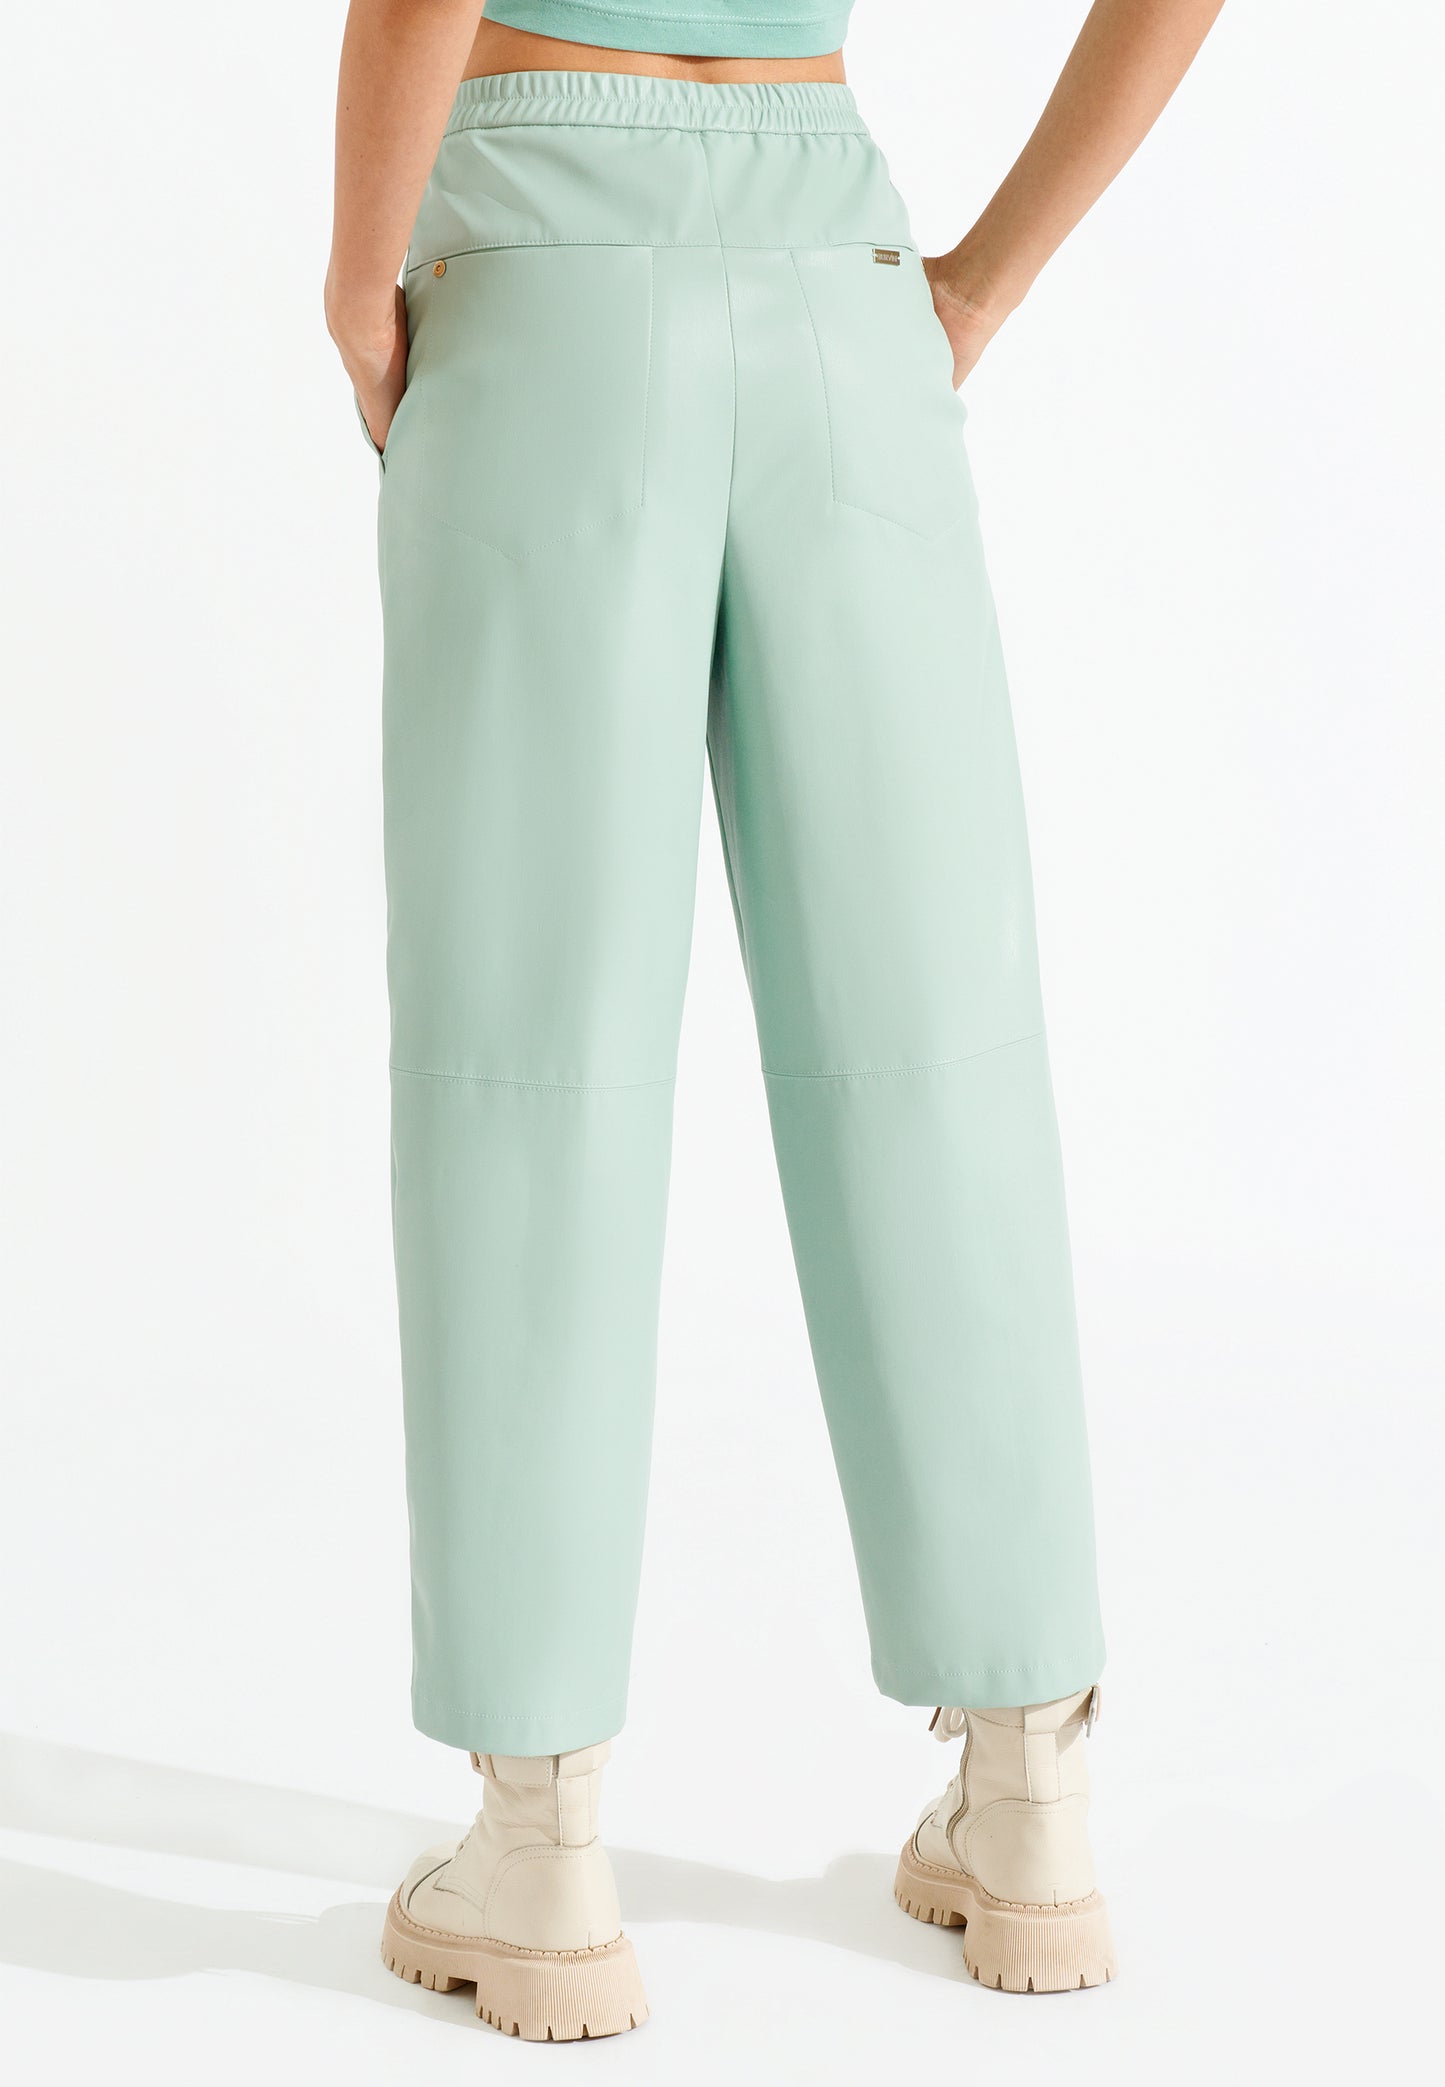 Eco Leather Turquoise Pants